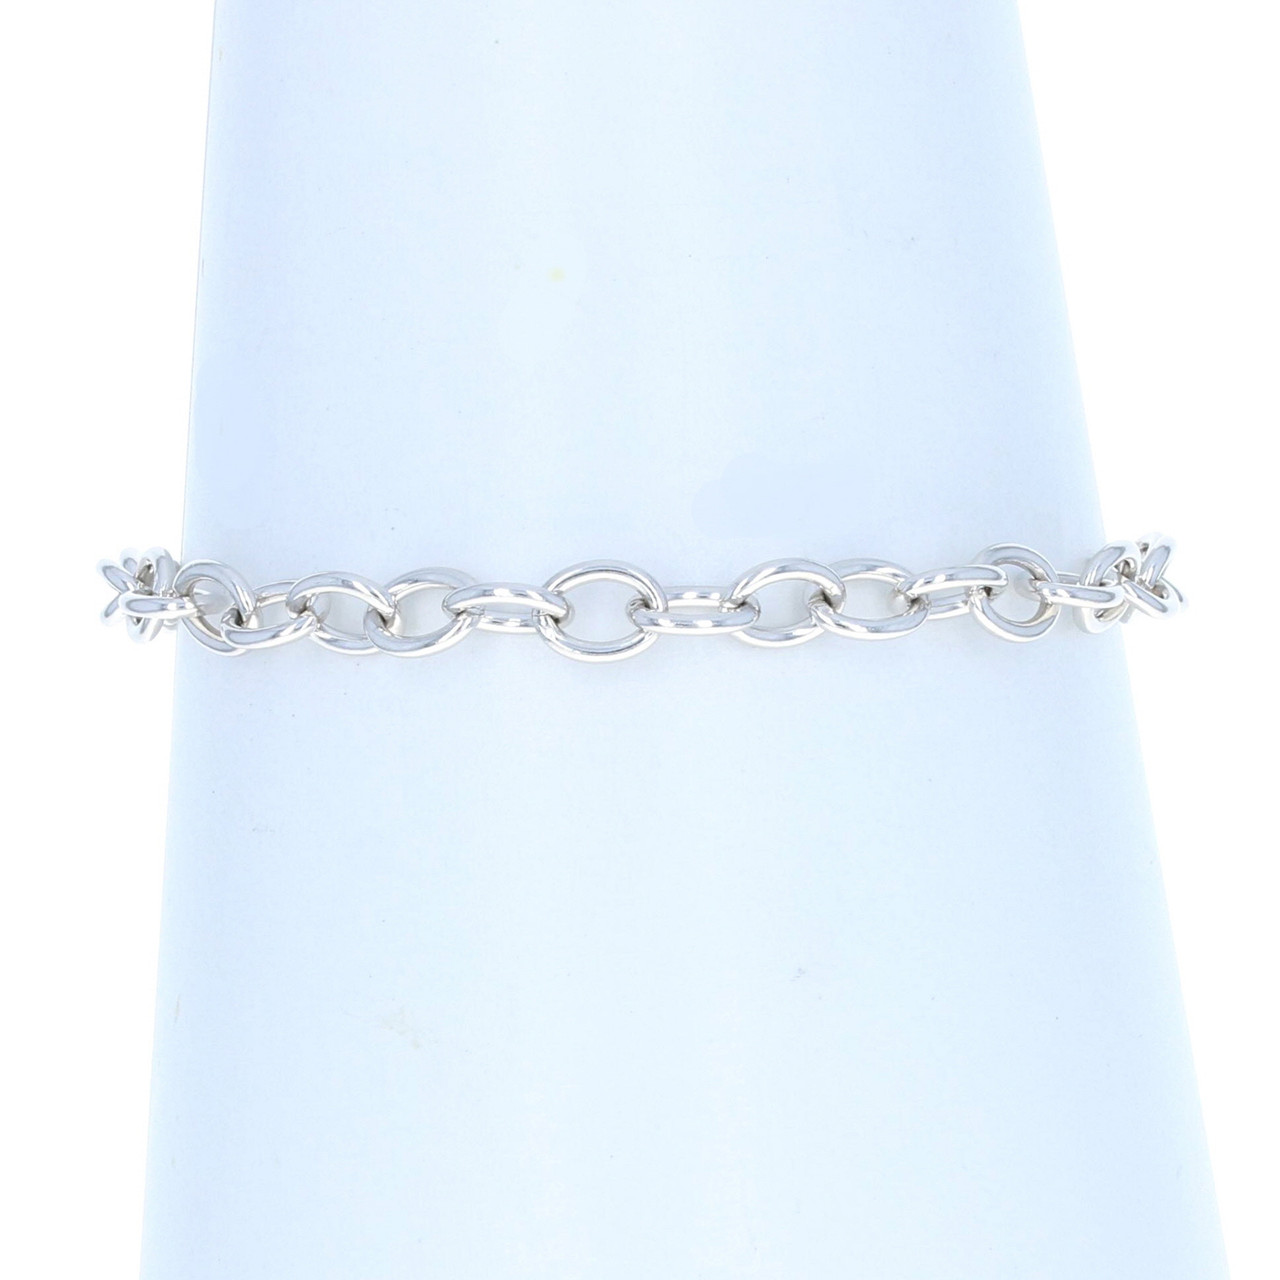 Women's Fancy 925 Sterling Silver Necklace and Bracelet Set